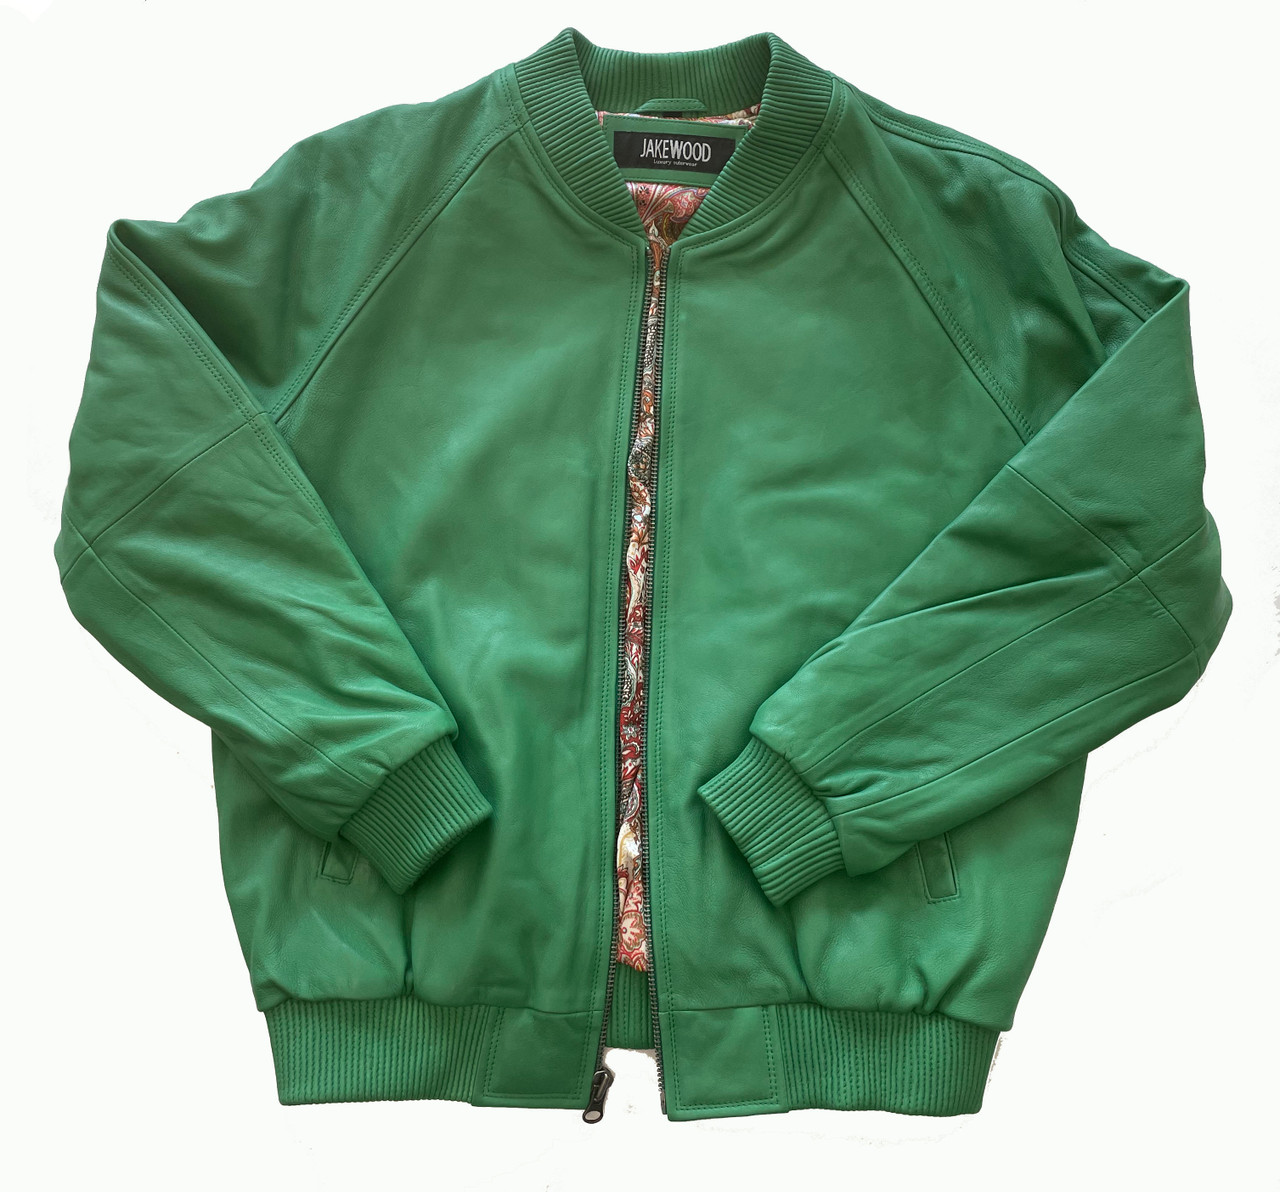 Jakewood Lime Green Butter Soft Leather Baseball Jacket (3XL) | HipHopCloset